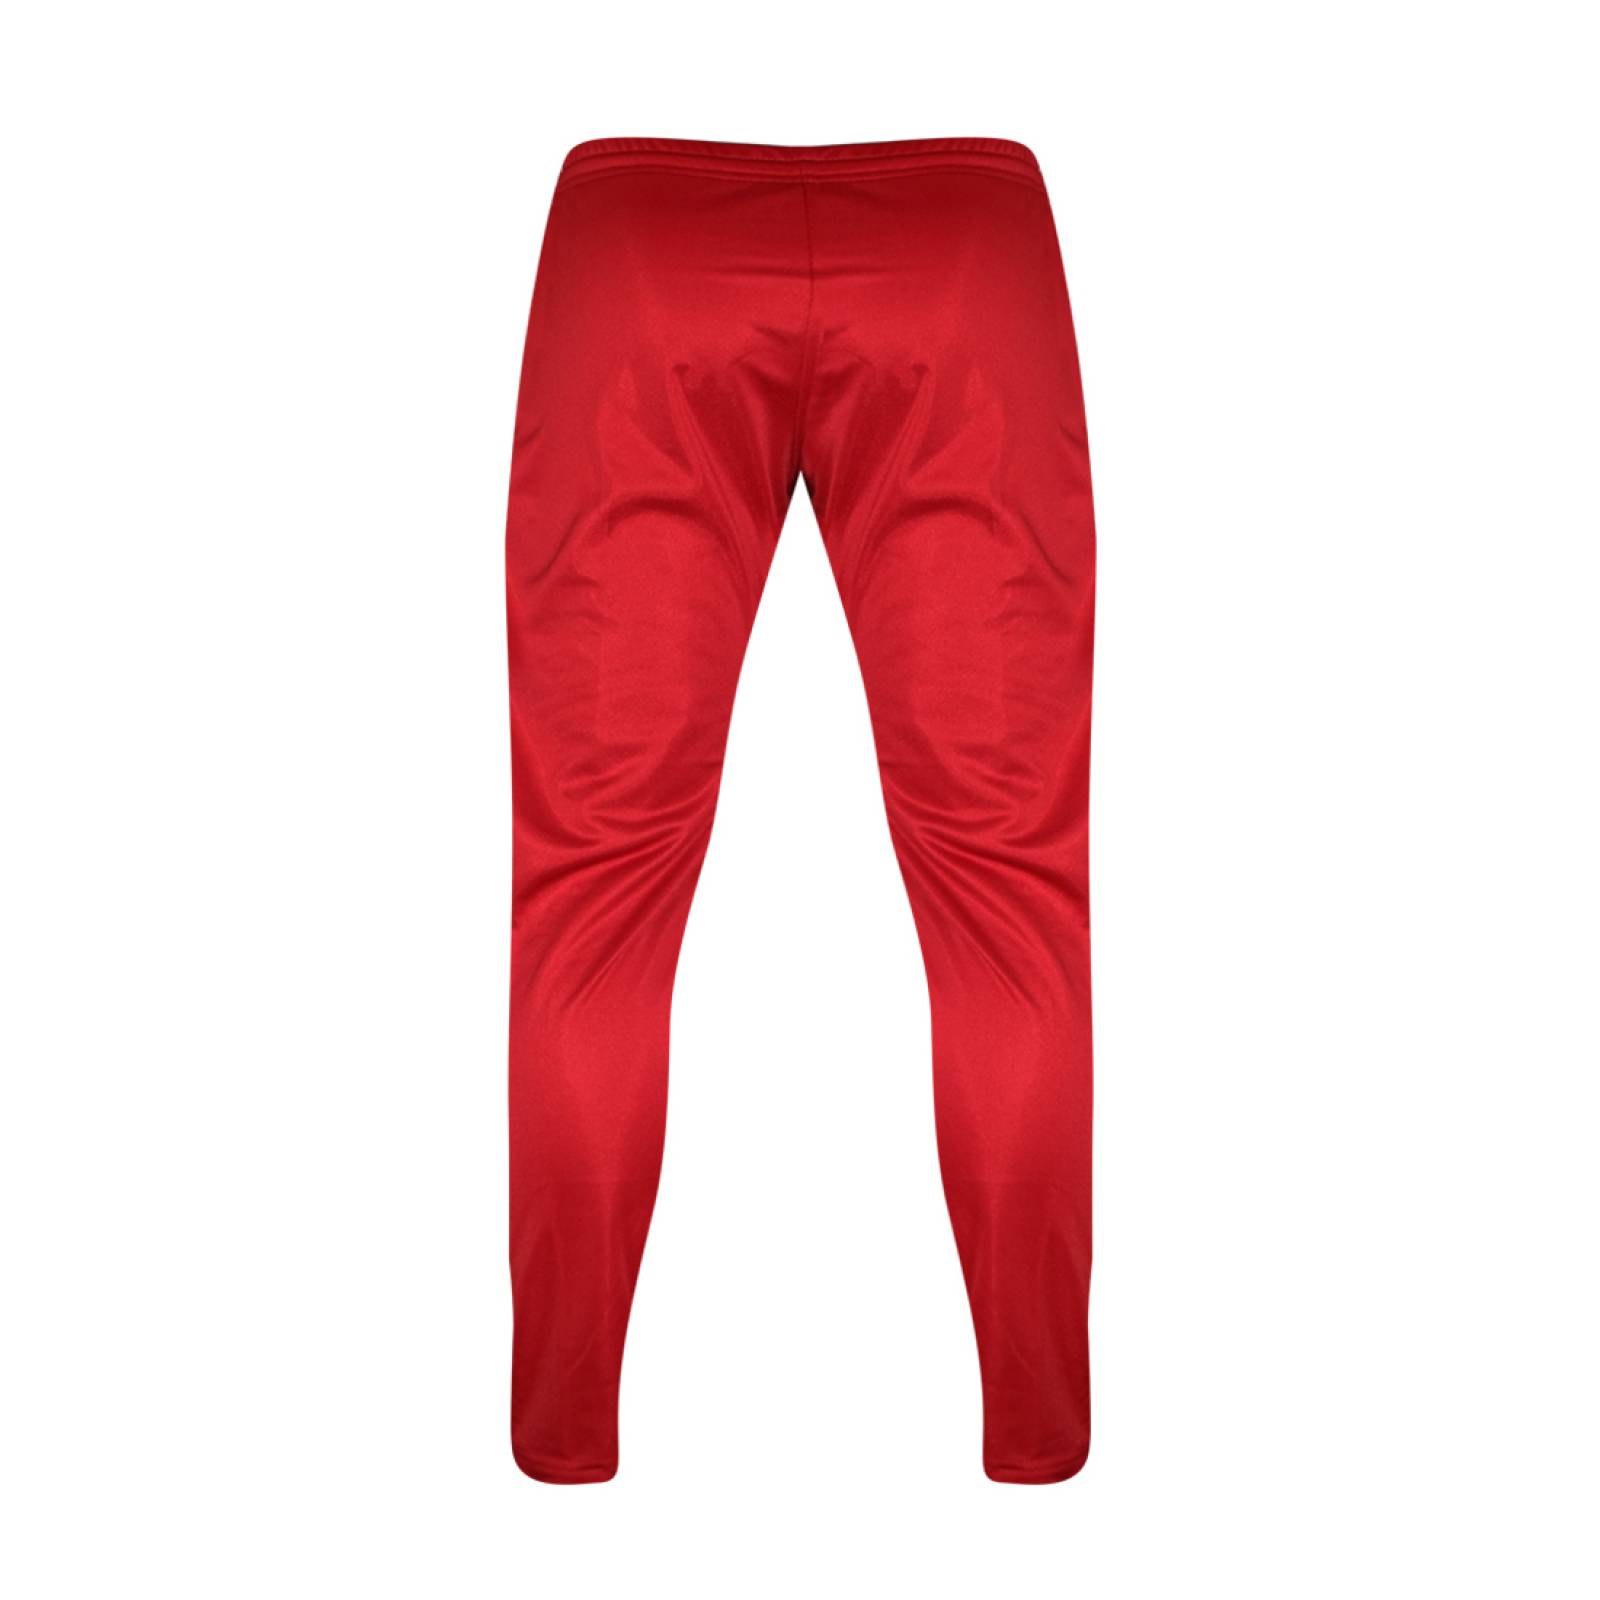 Pants Hombre Pantalon Caballero Deportivo Sport Rojo Kappa